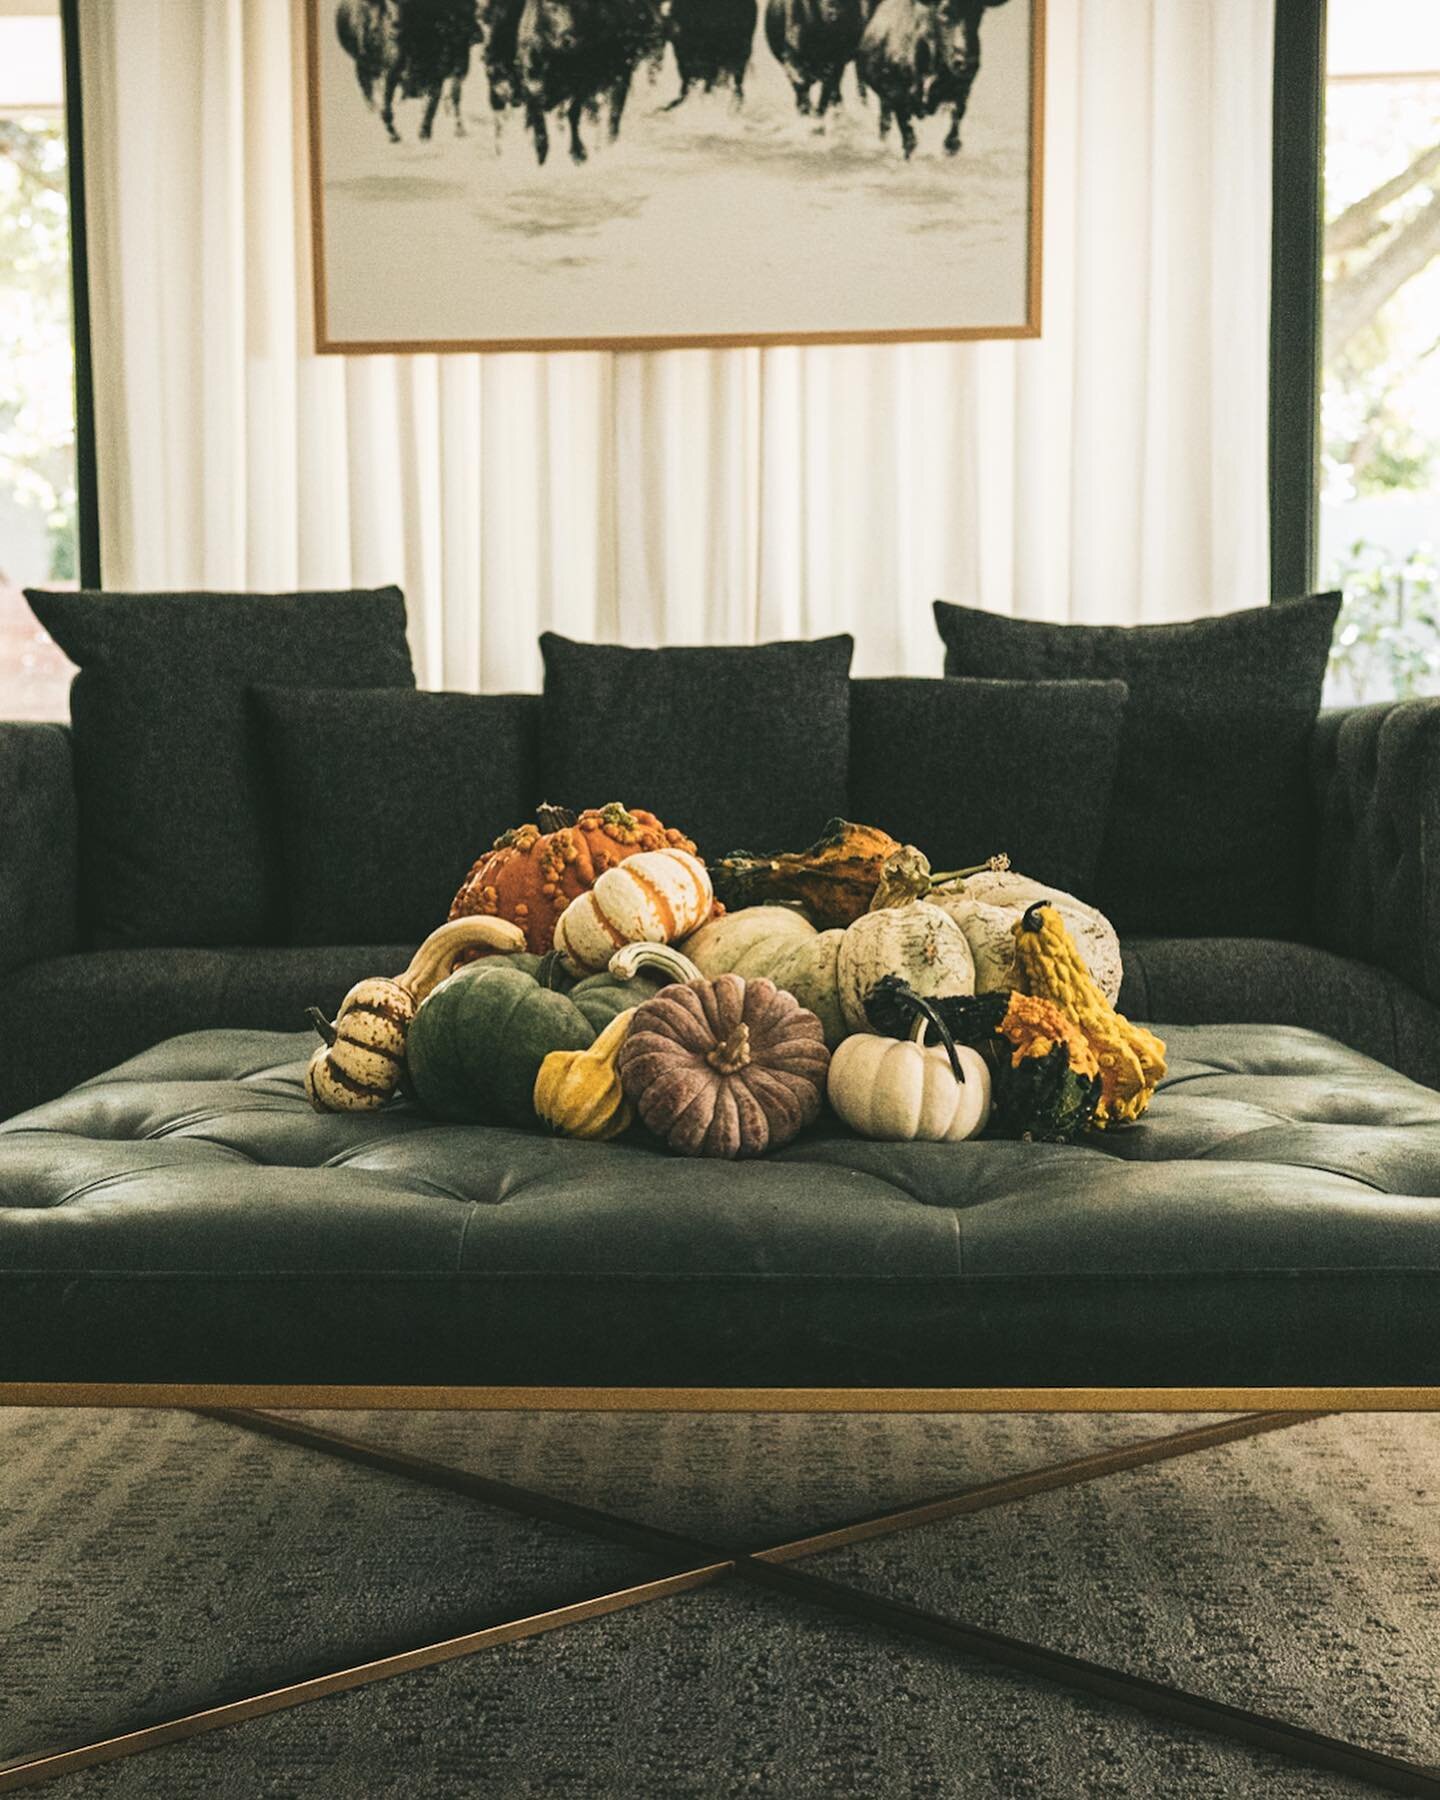 The Great Livingroom Pumpkin Patch!  Heehee. 

#fallgarden #centraltexasgarden #pumpkinlove #fallphotography🍂🍁 #halloweendecor #falldecor